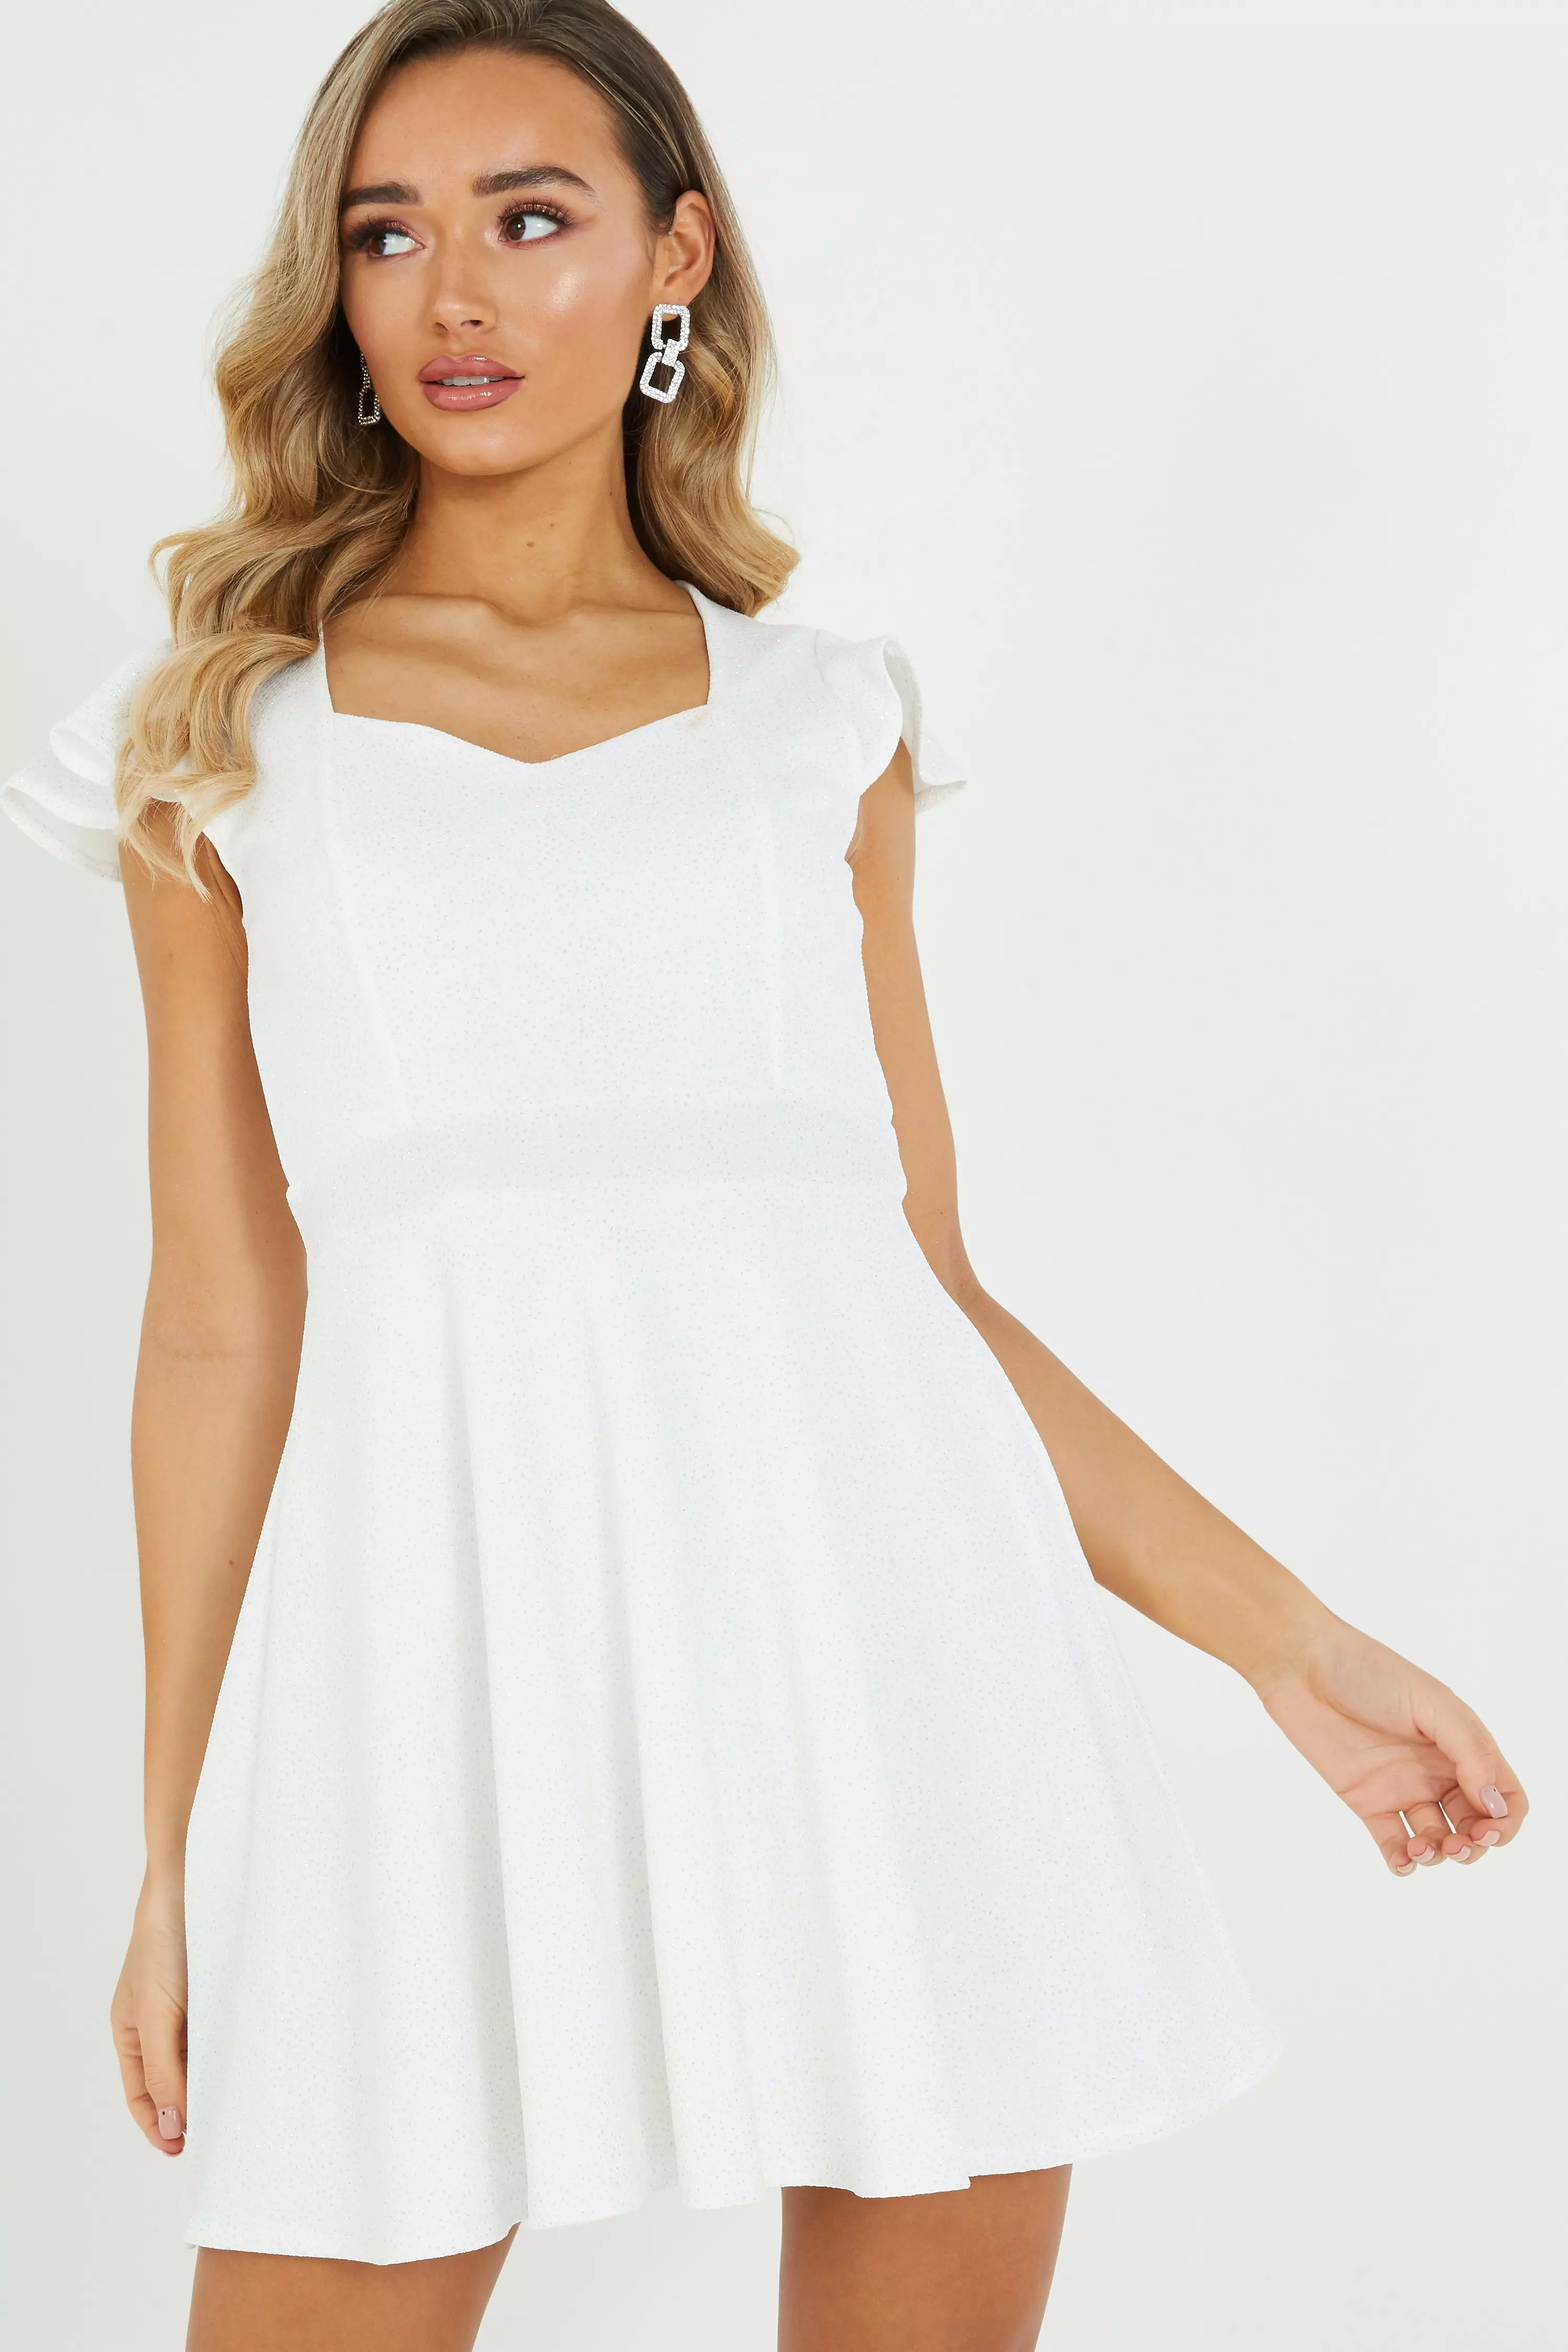 white and glitter dress